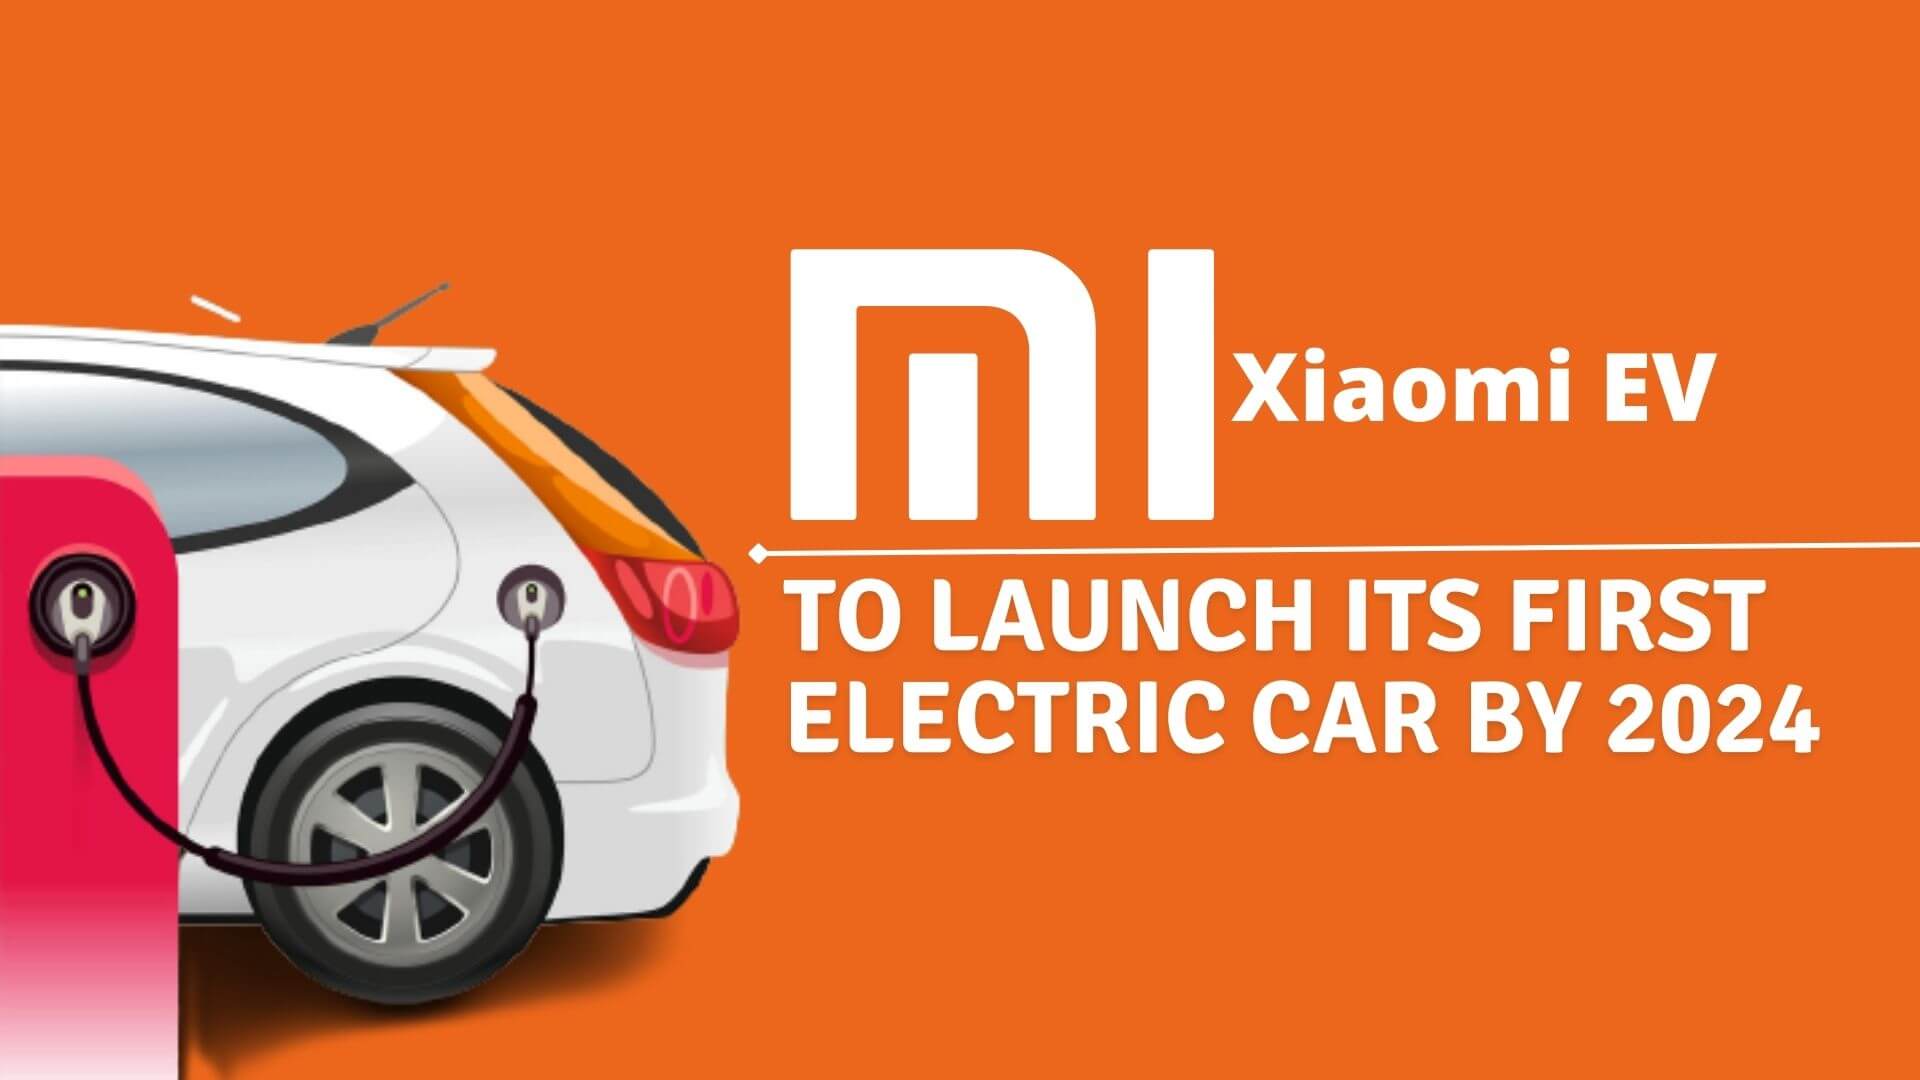 https://e-vehicleinfo.com/xiaomi-ev-to-launch-first-electric-car-by-2024/